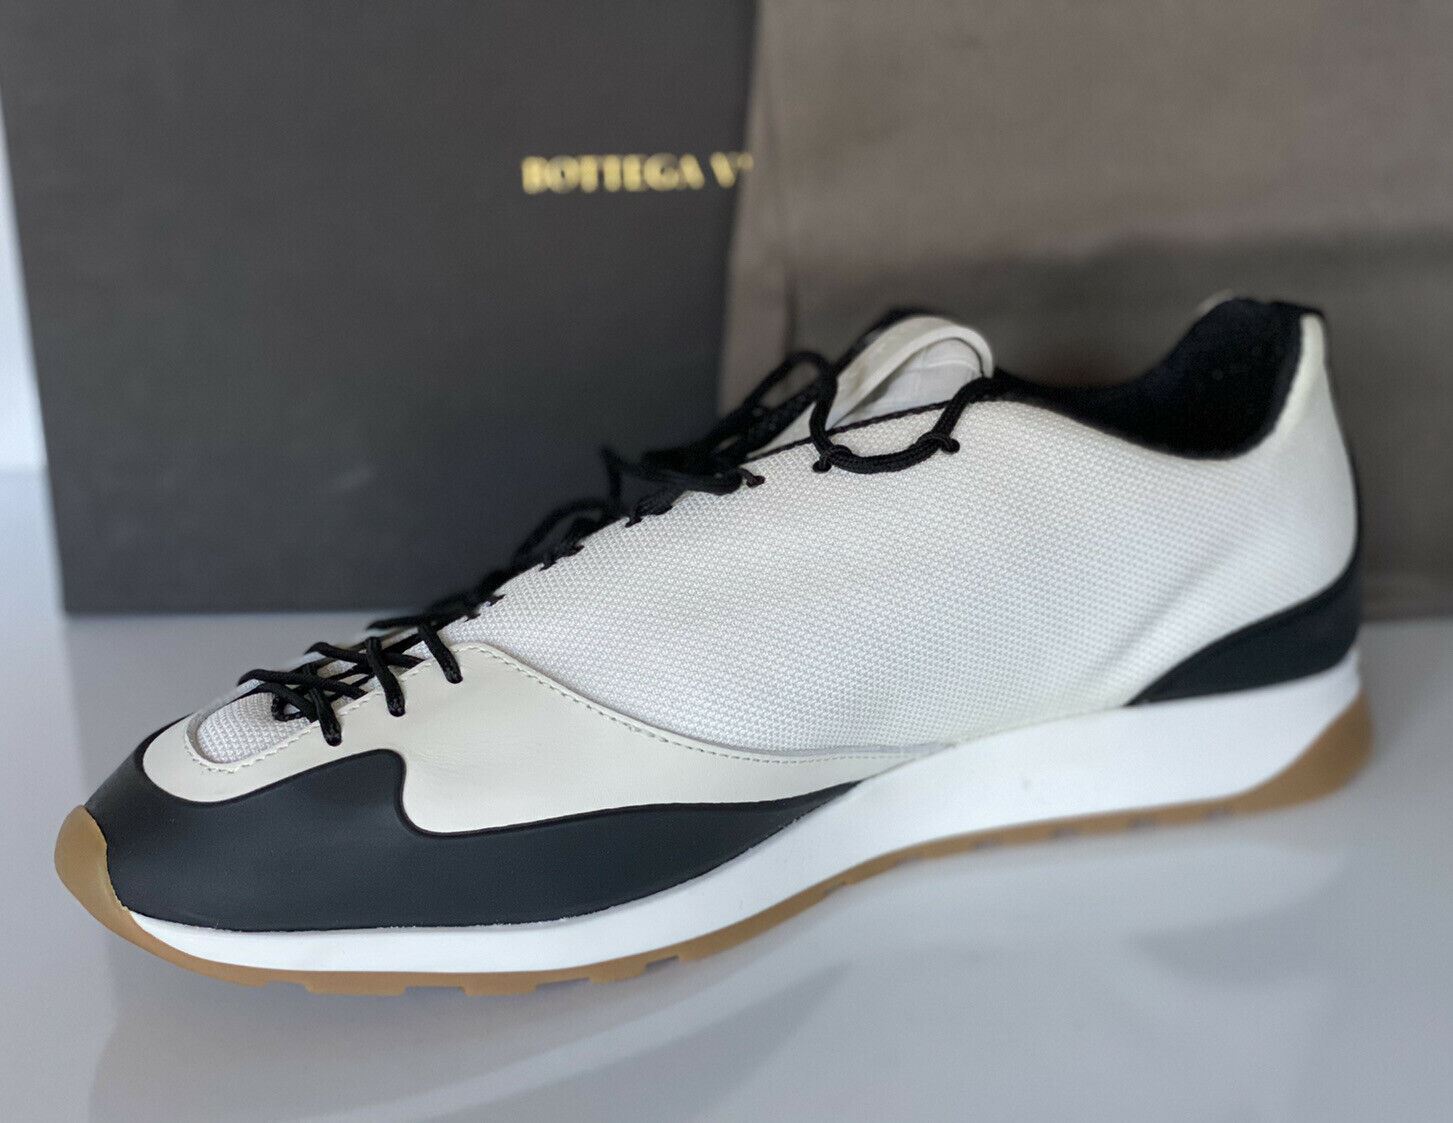 NIB $790 Bottega Veneta Men's Scar Tex White Sneakers 10 US (43 Euro) 609891